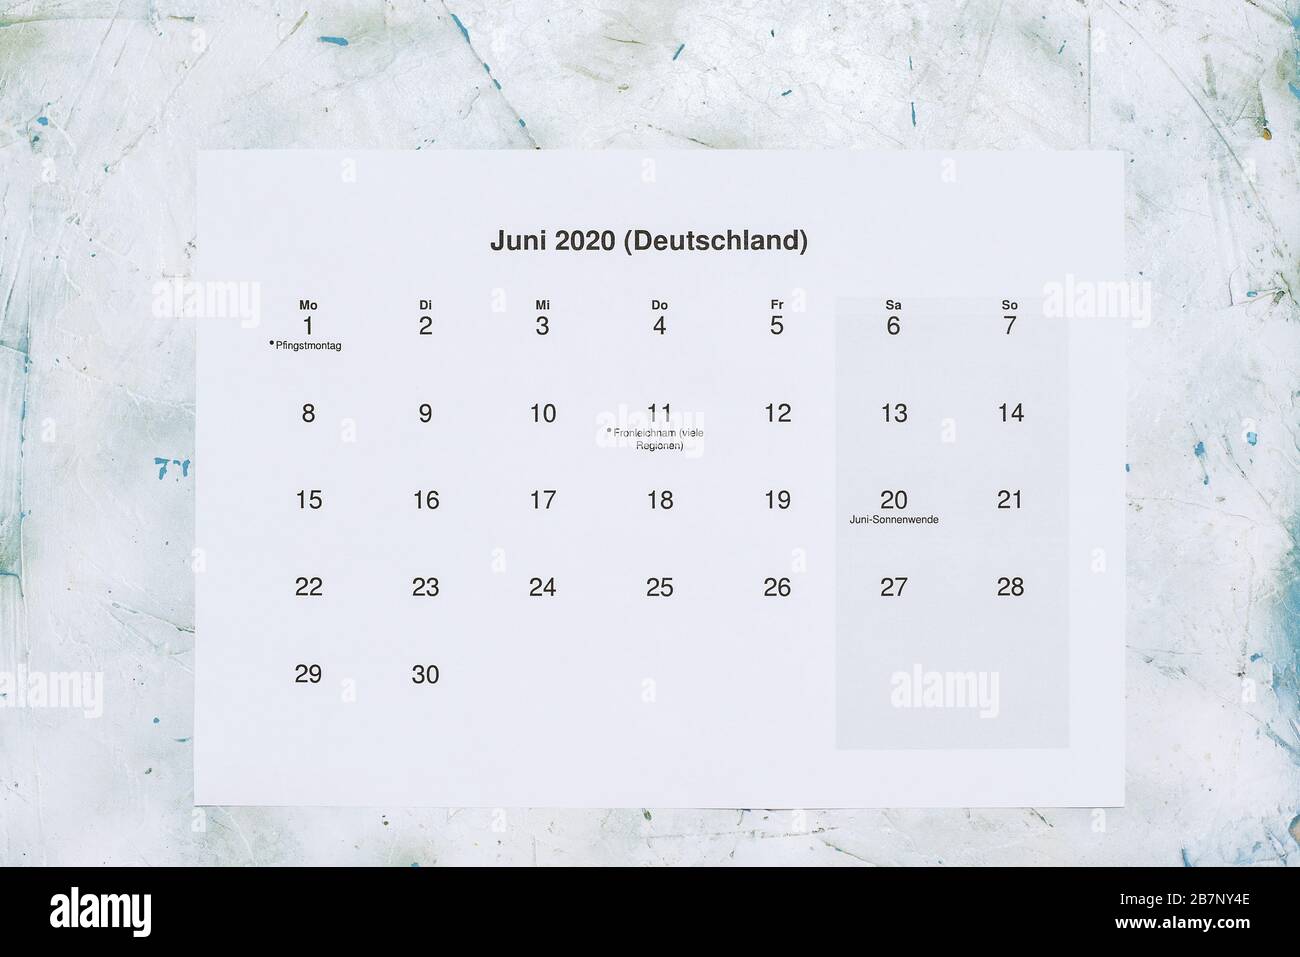 Monatskalender Juni 2020. Translation: Monthly June 2020 calendar. Paper June month calendar in Dutch. Top view Stock Photo